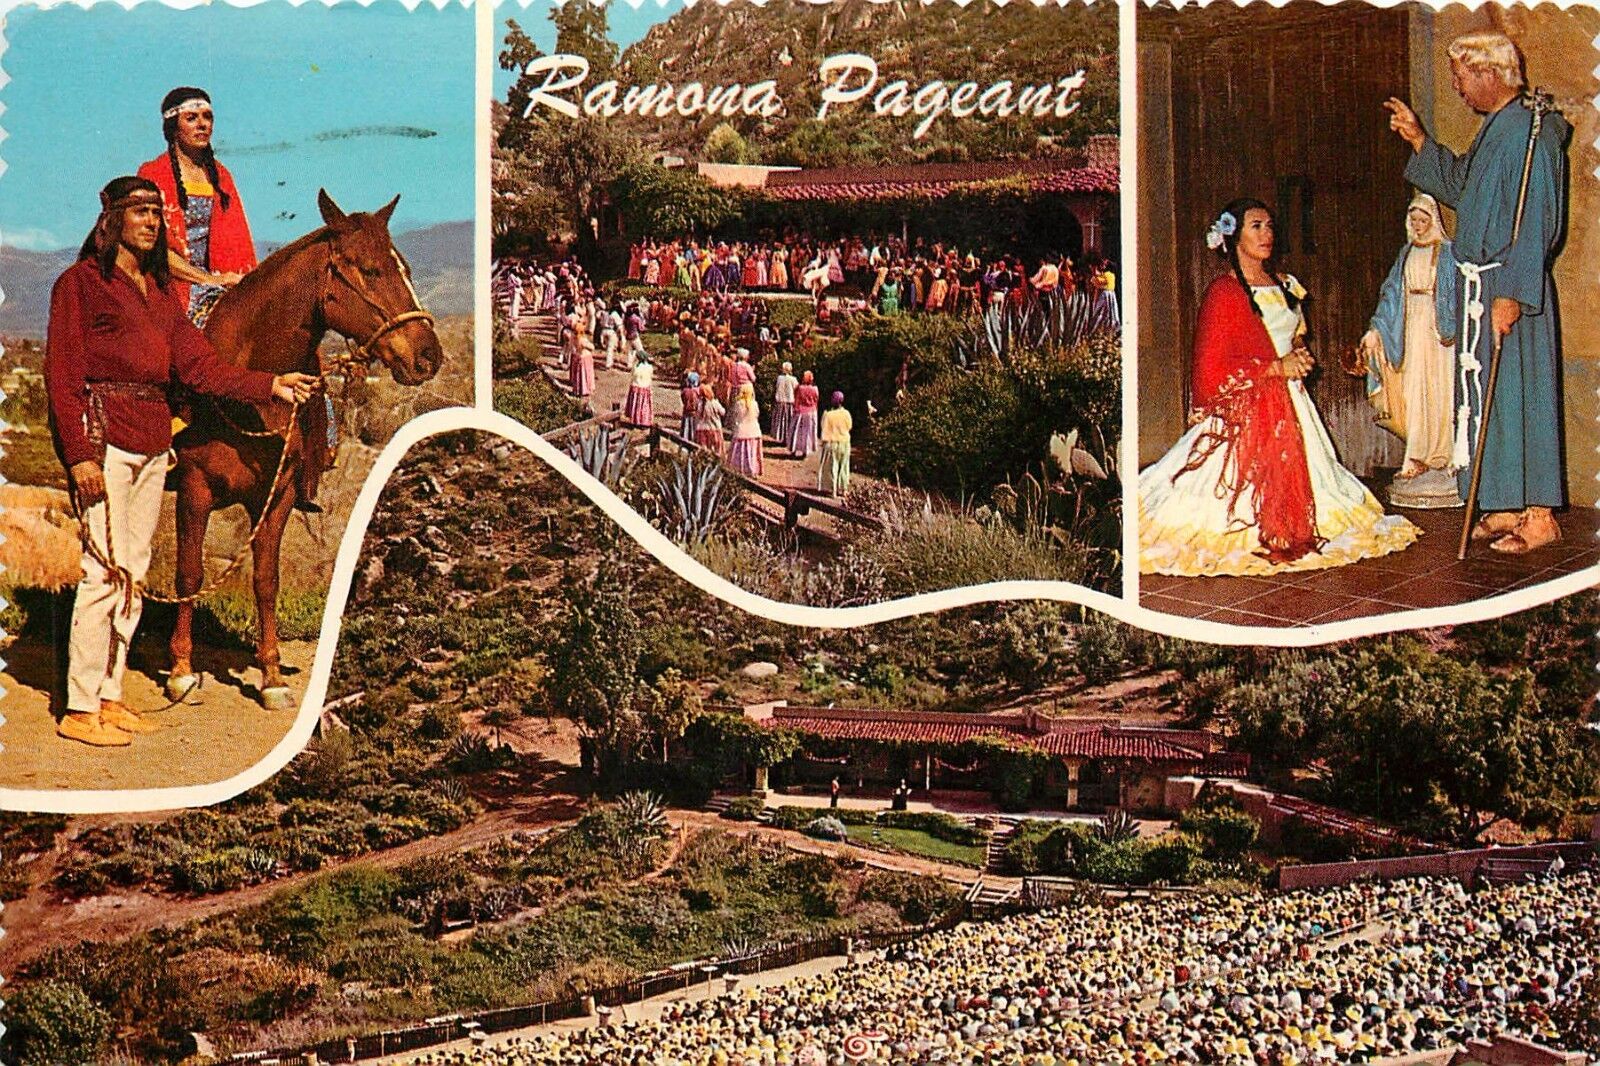 Ramona Outdoor Pageant San Jacinto CA California Postcard 1973